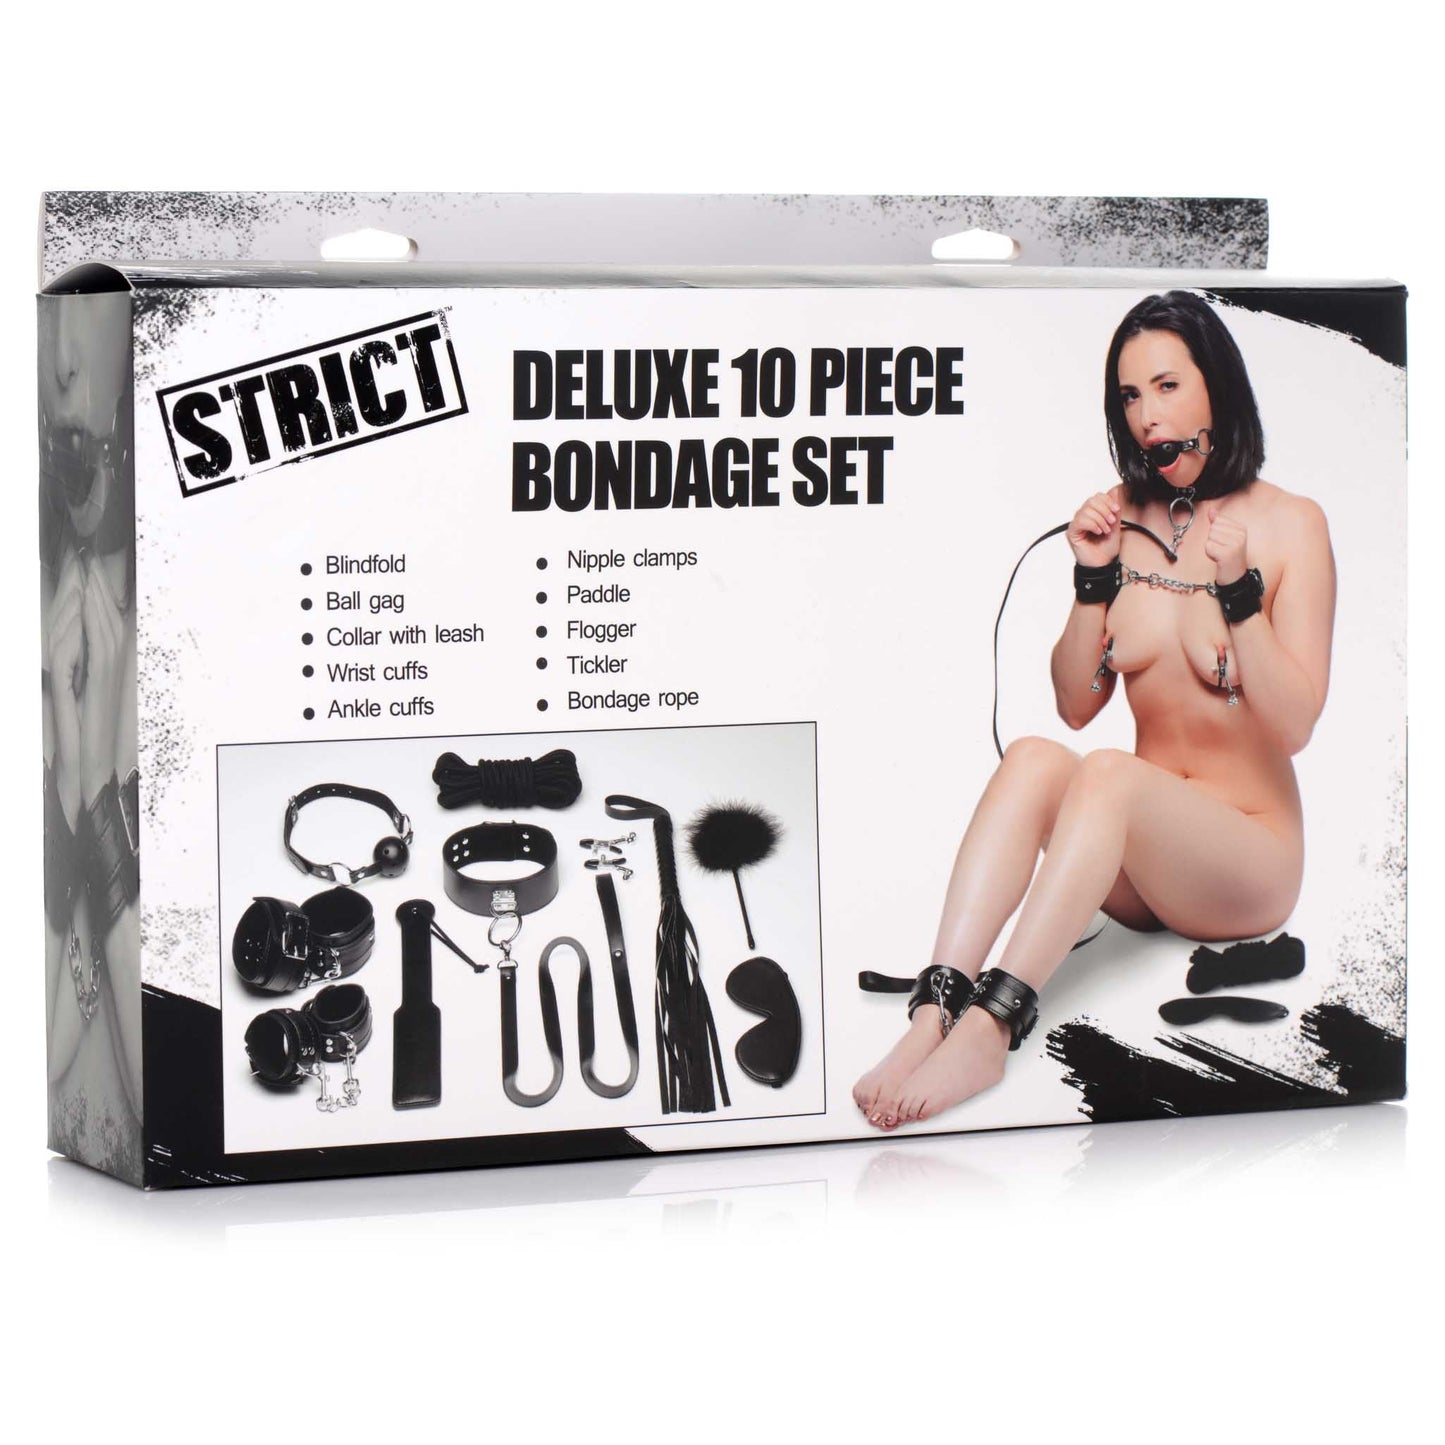 Strict Deluxe 10 Piece Bondage Set - Black